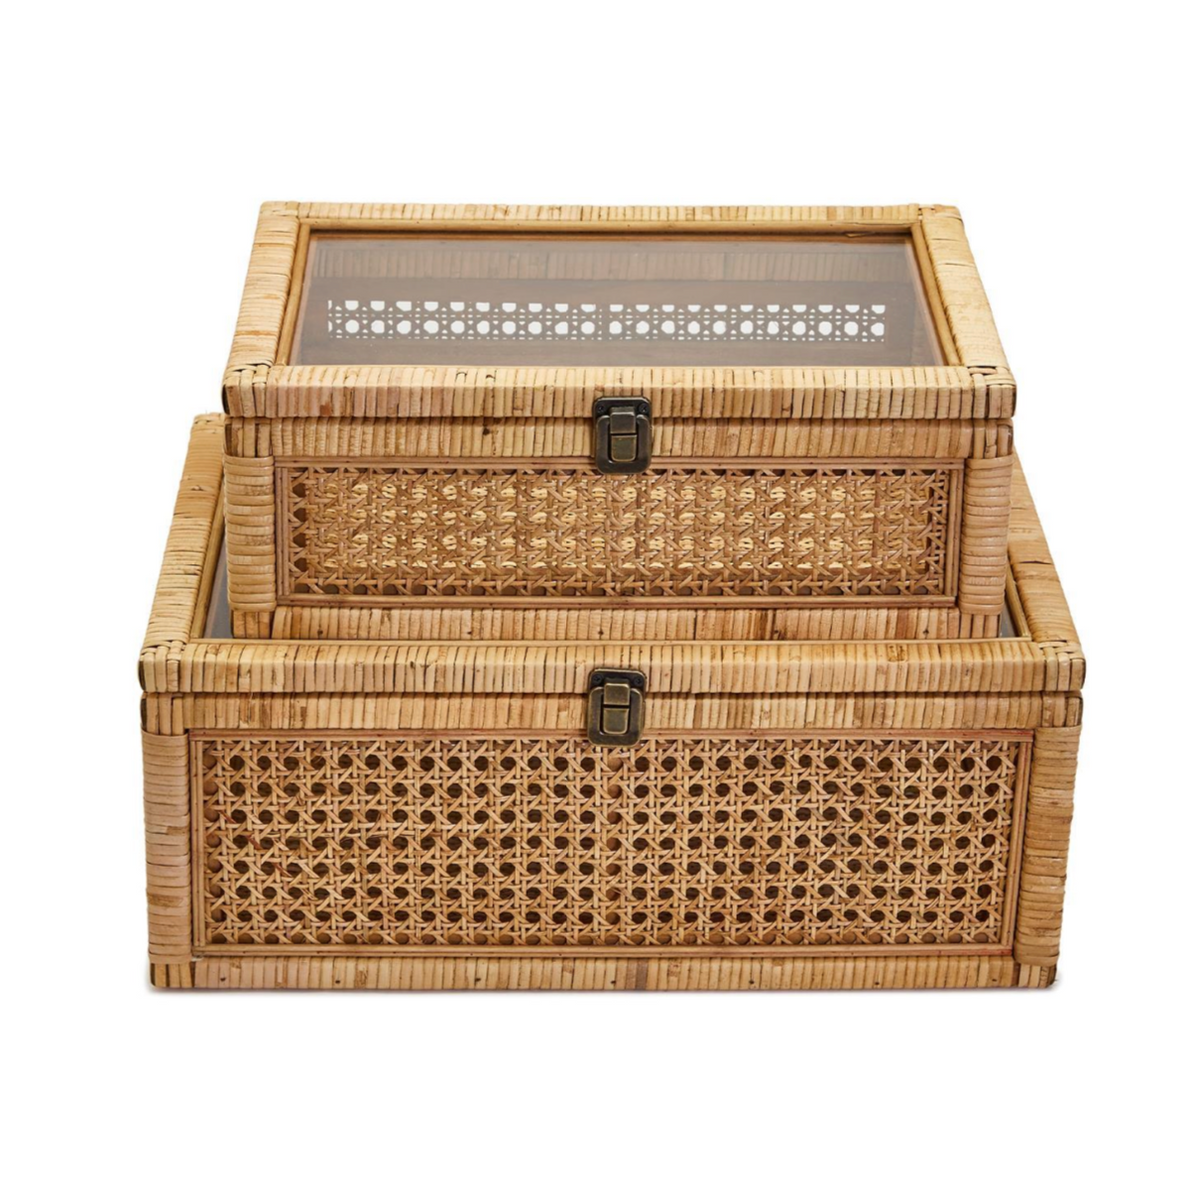 Rattan Decorative Storage Box